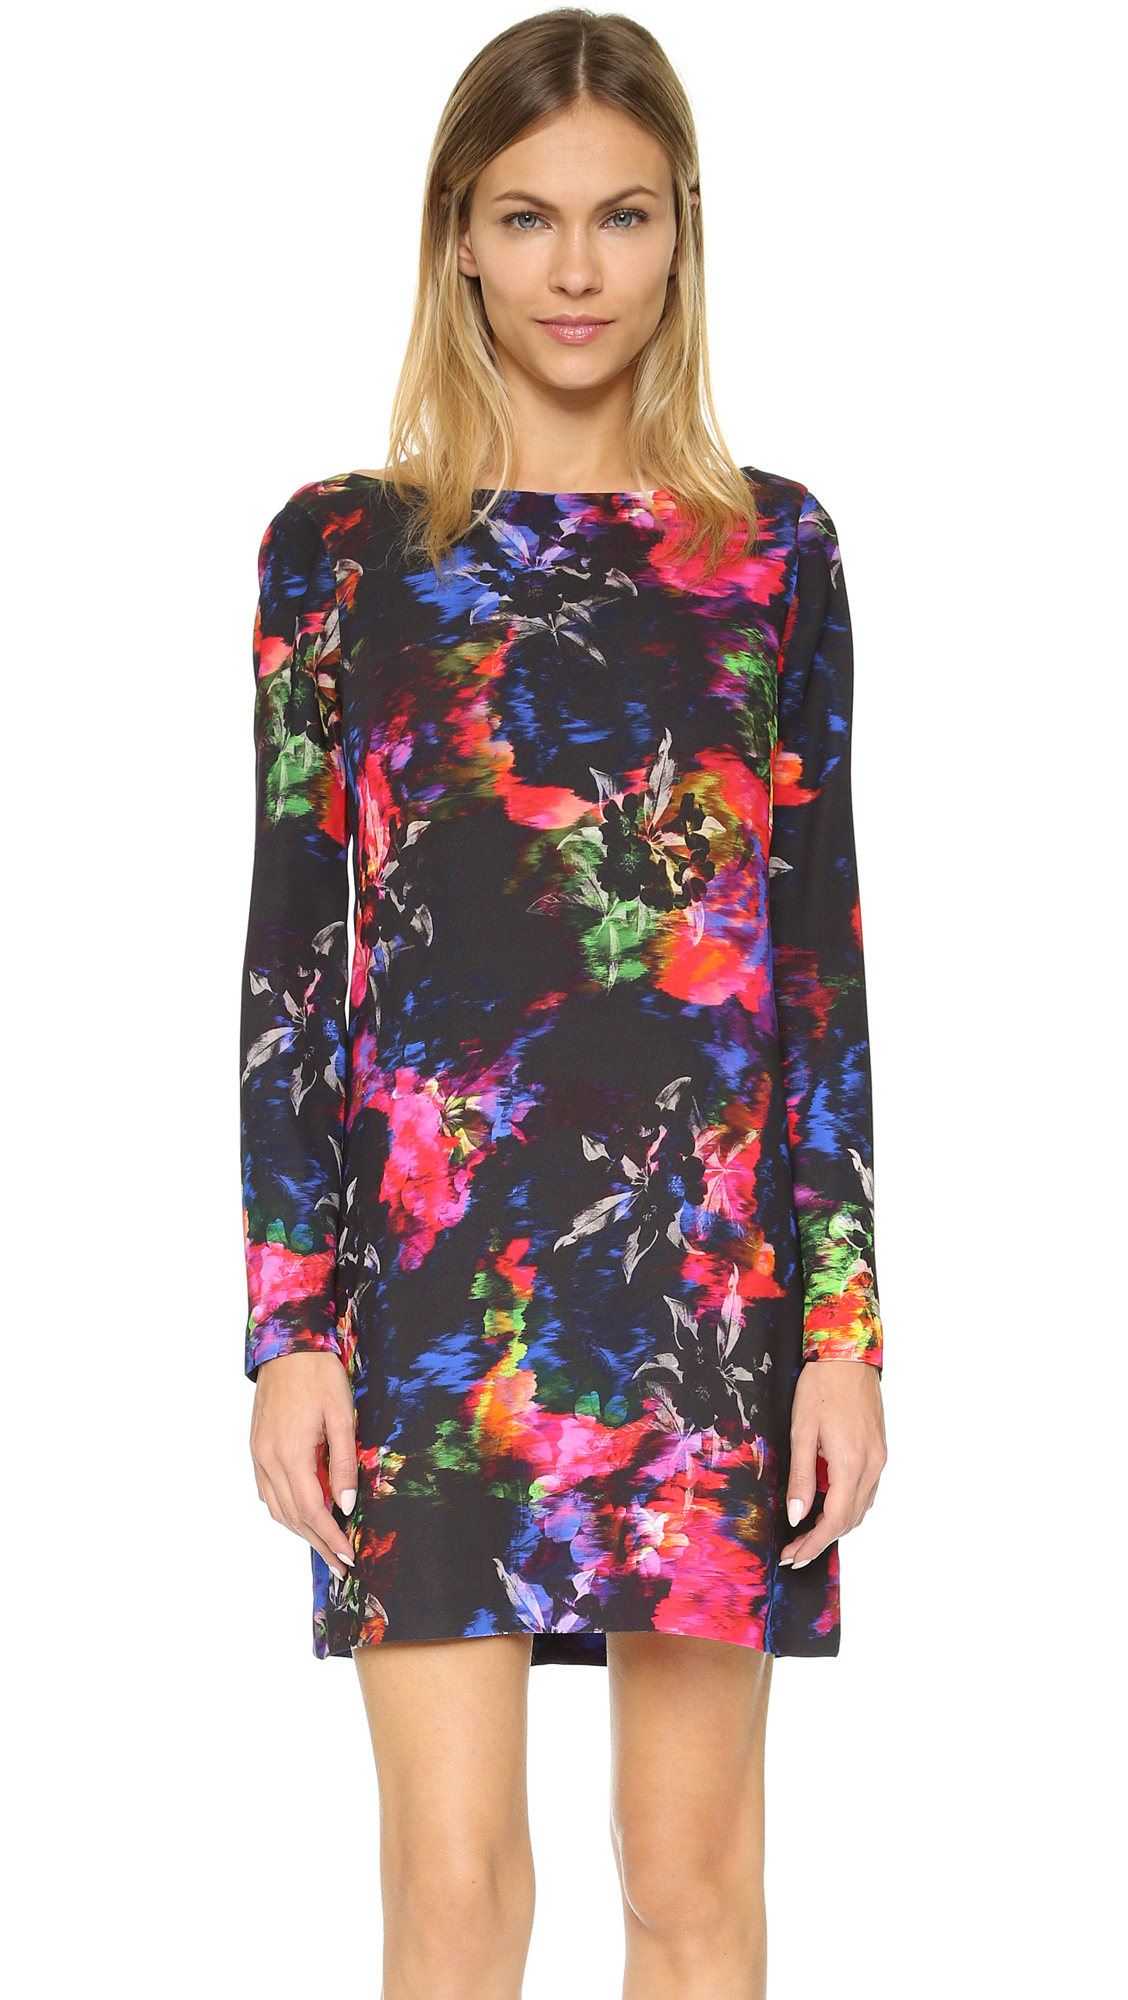 Lyst - Milly Jewel Floral Print Dress